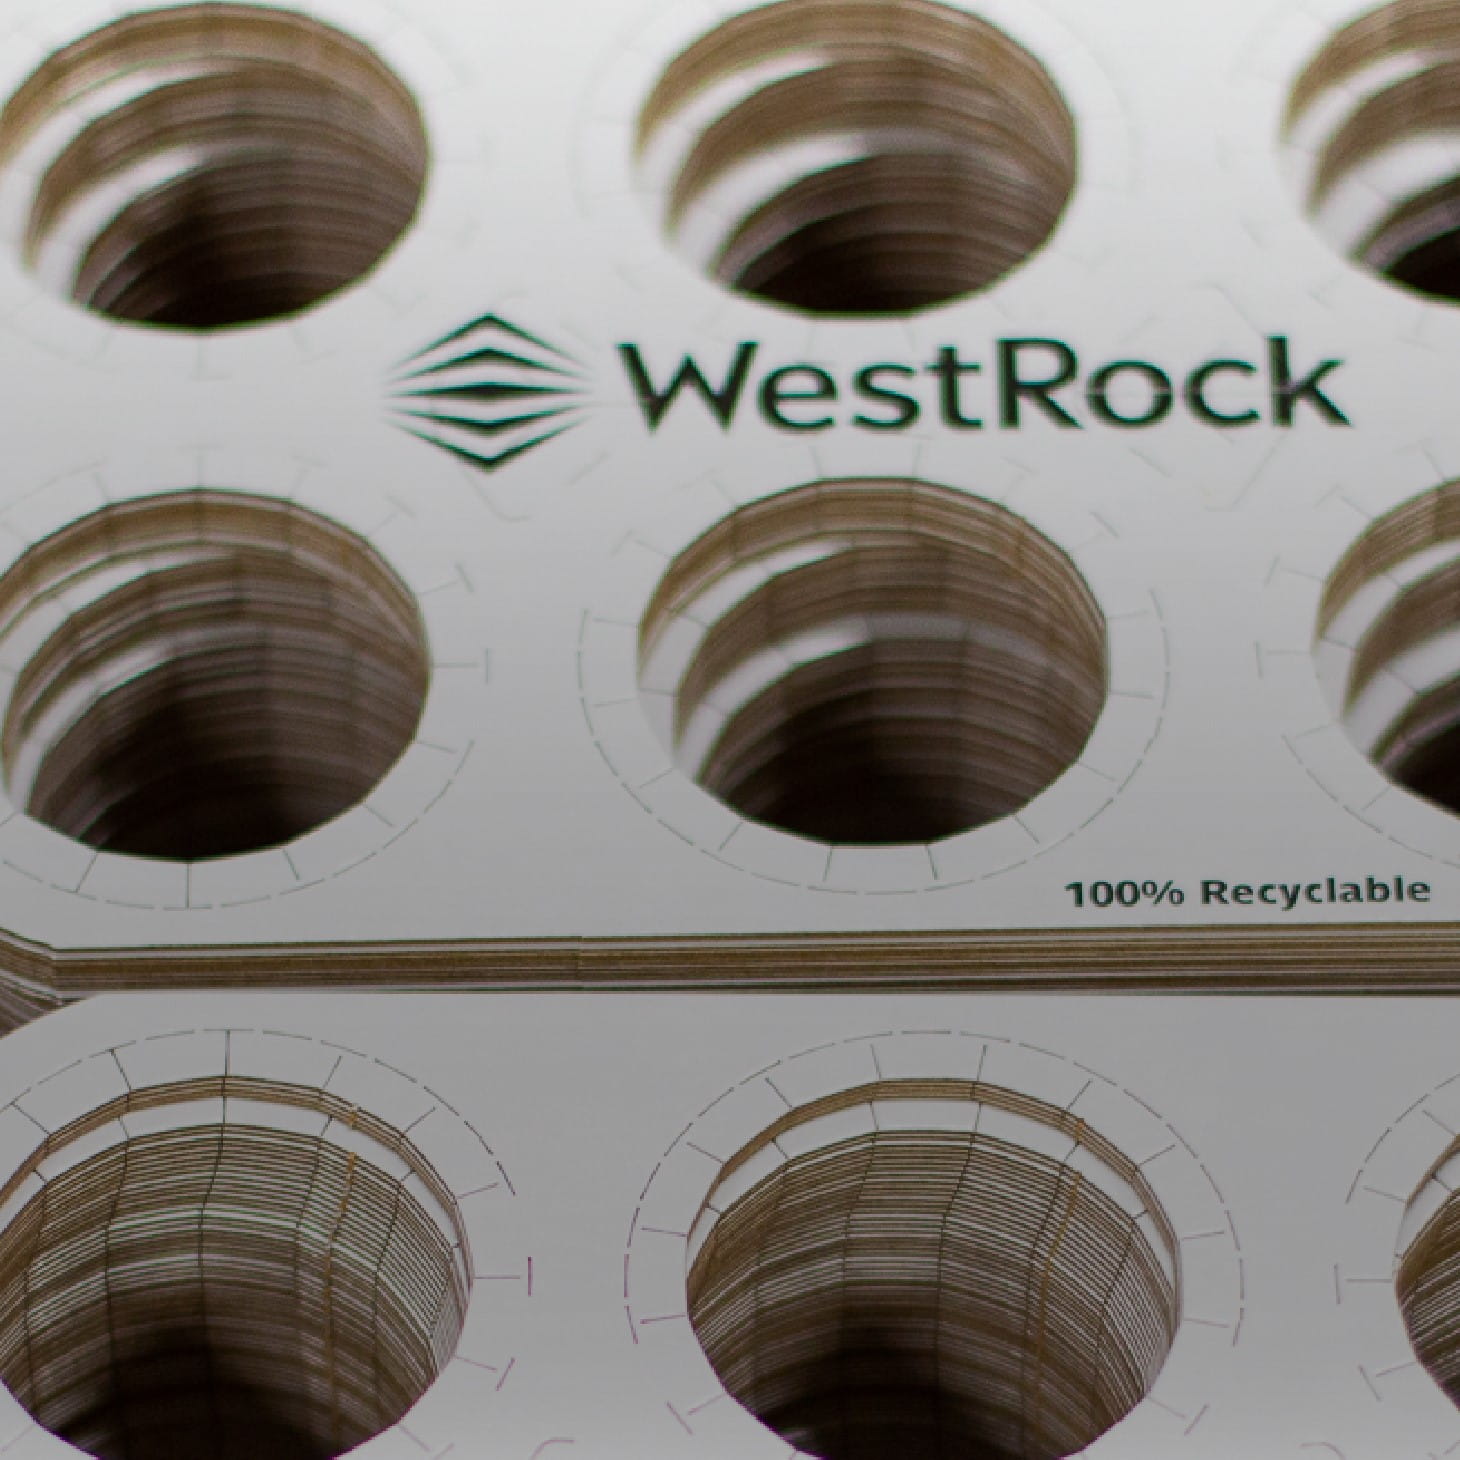 WestRock advancing sustainable packaging